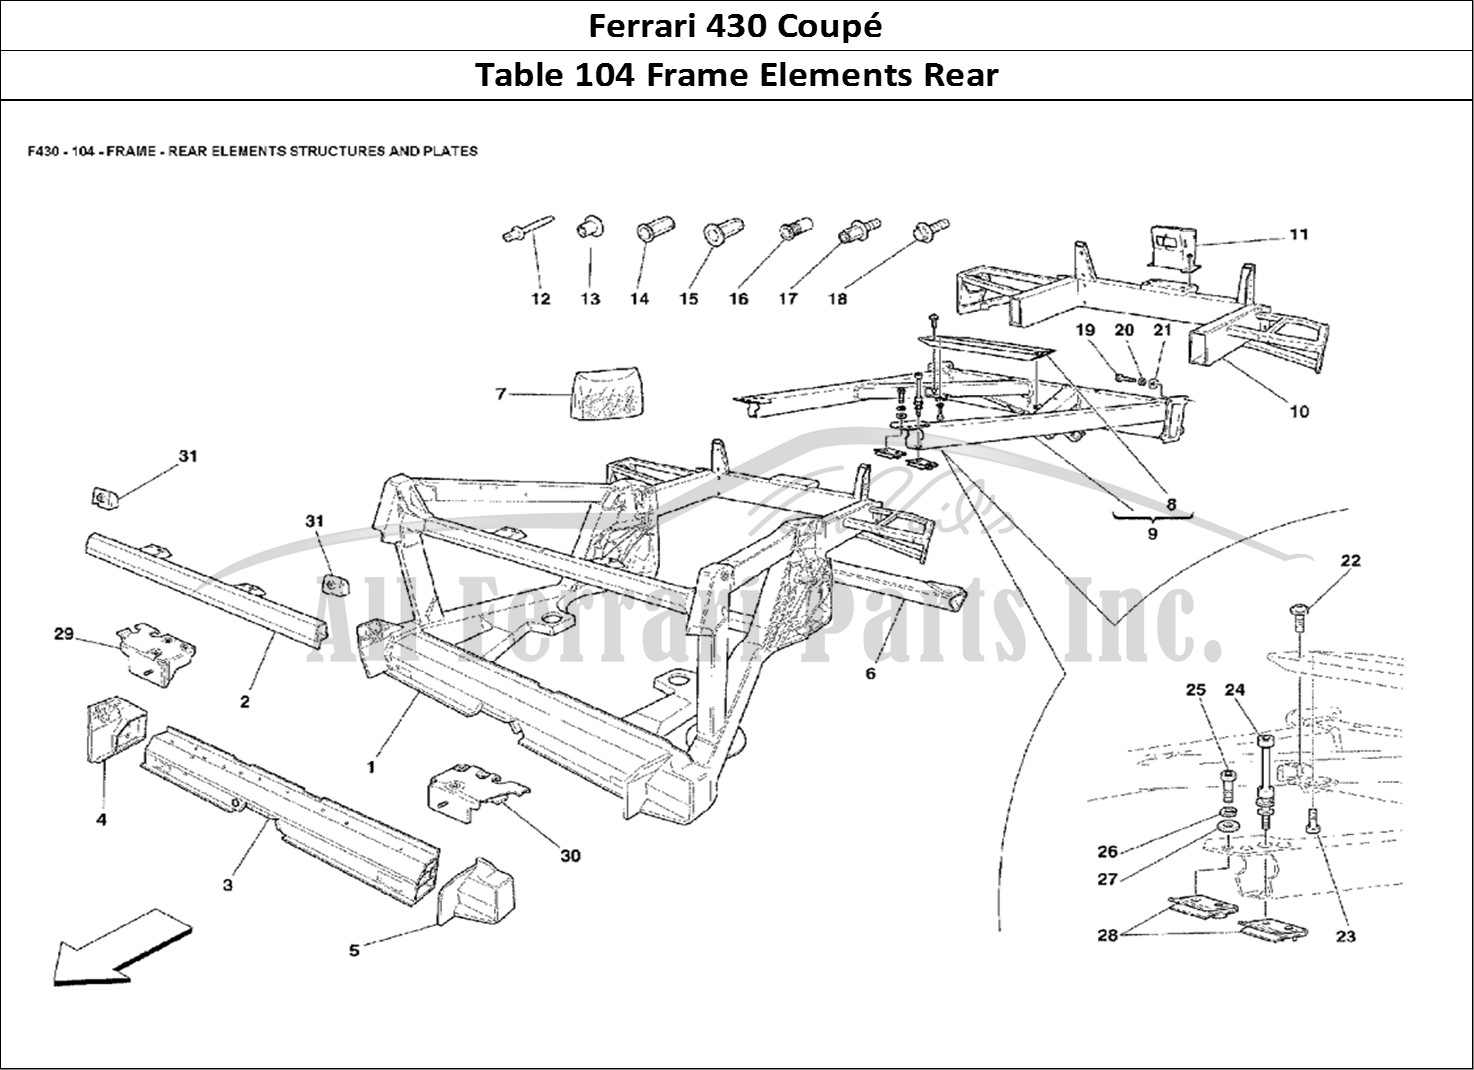 Ferrari Parts Ferrari 430 Coup Page 104 Frame - Rear Elements Str